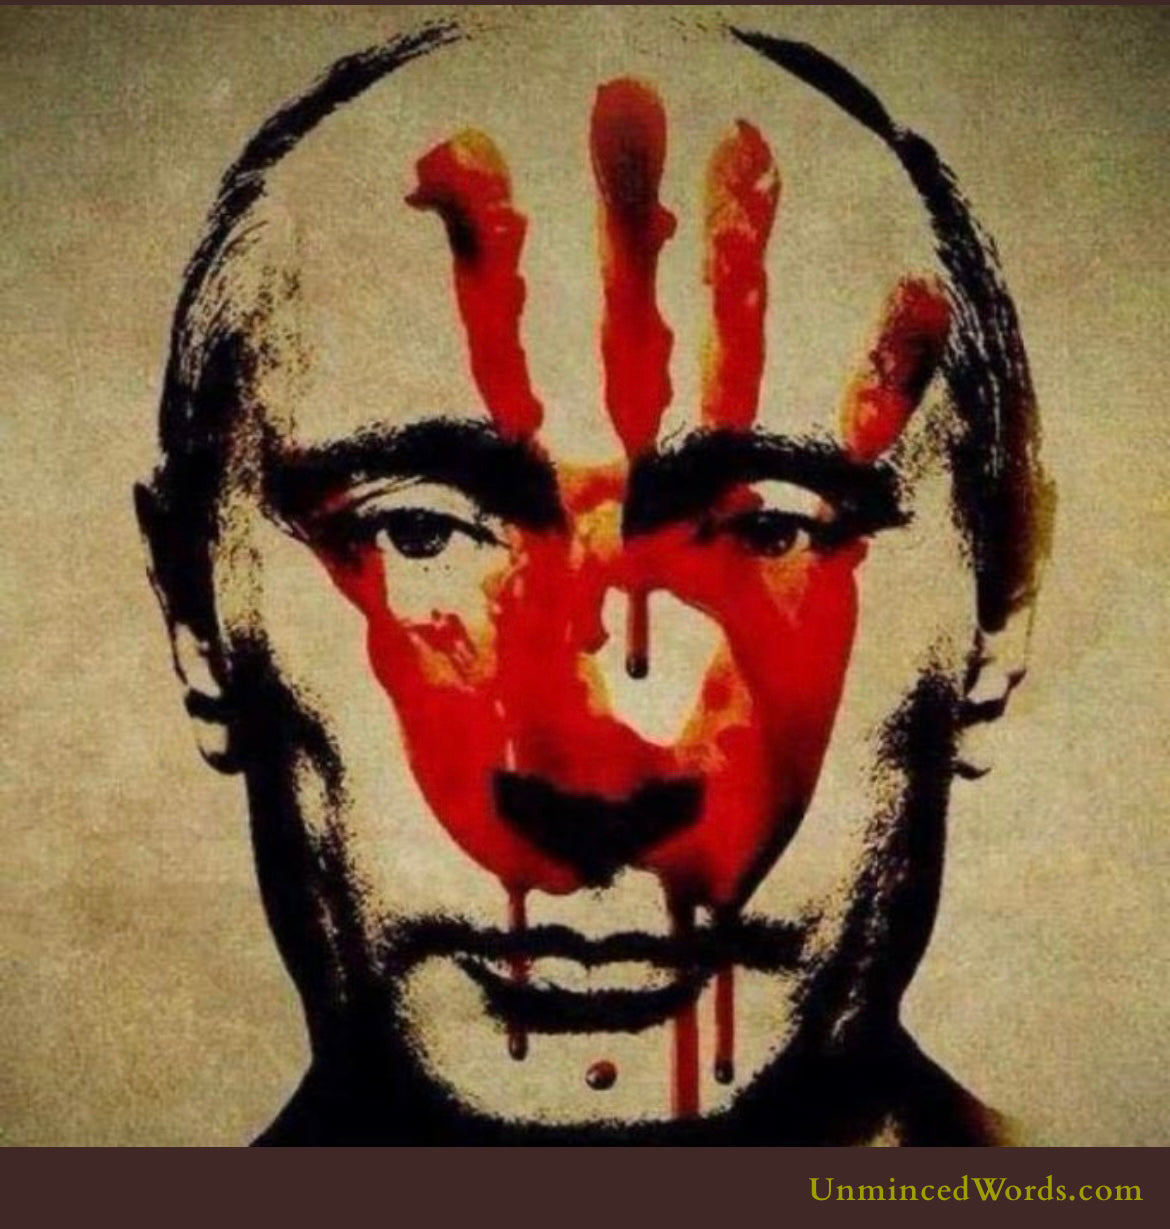 Putin’s Brutal War on innocent Ukraine summed up in one image